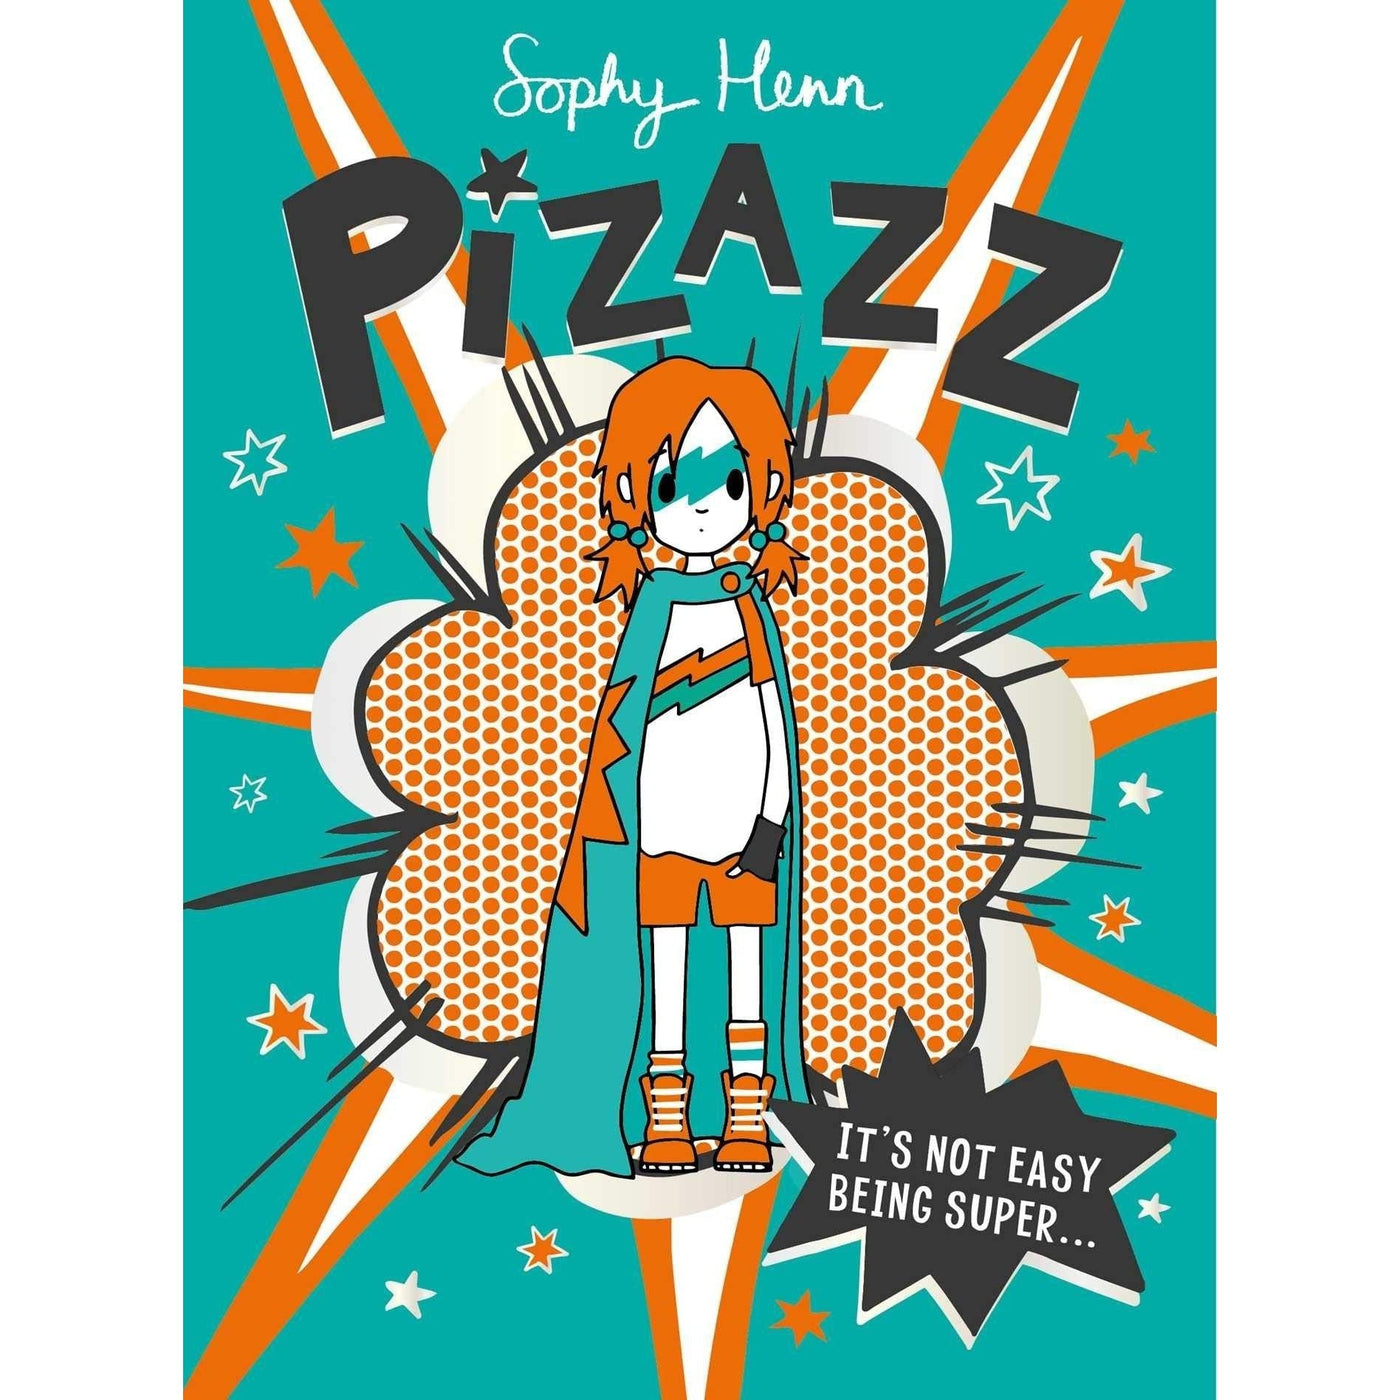 Pizazz: The Super Awesome New Superhero Series!